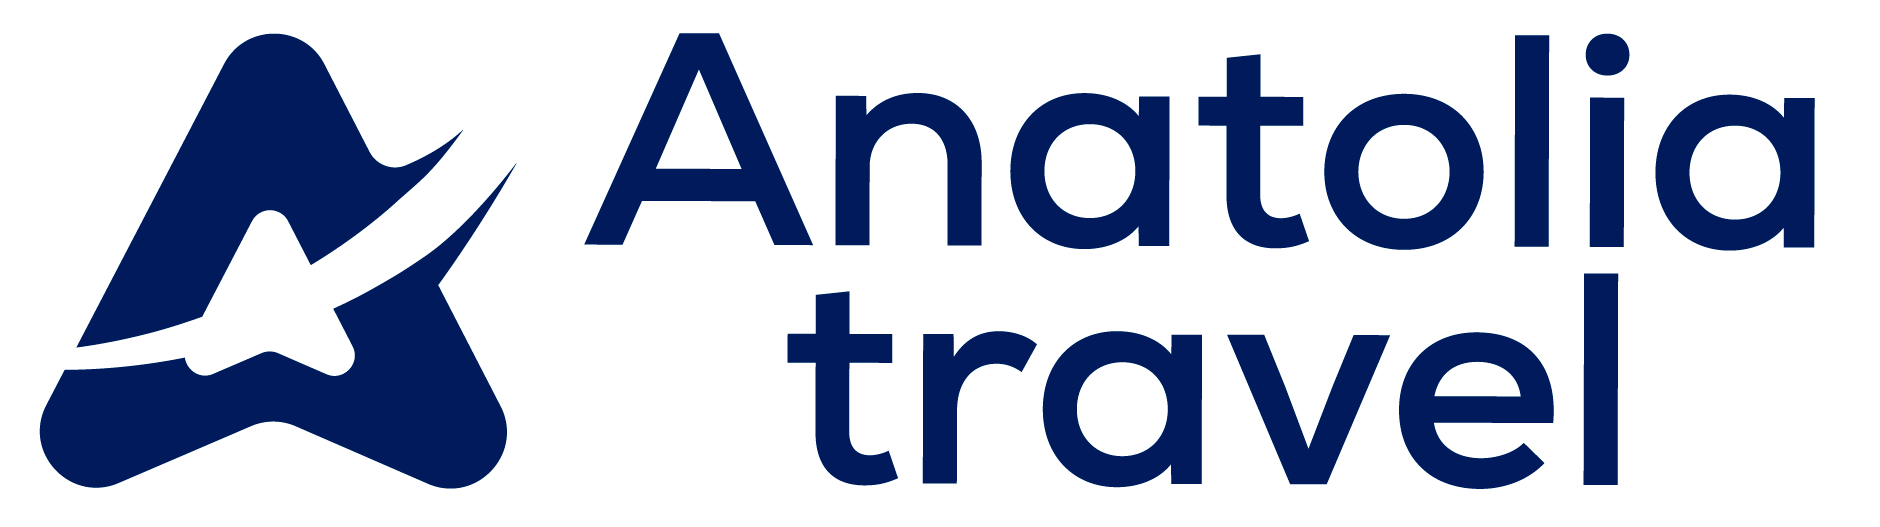 Anatolia Travel Group Logo